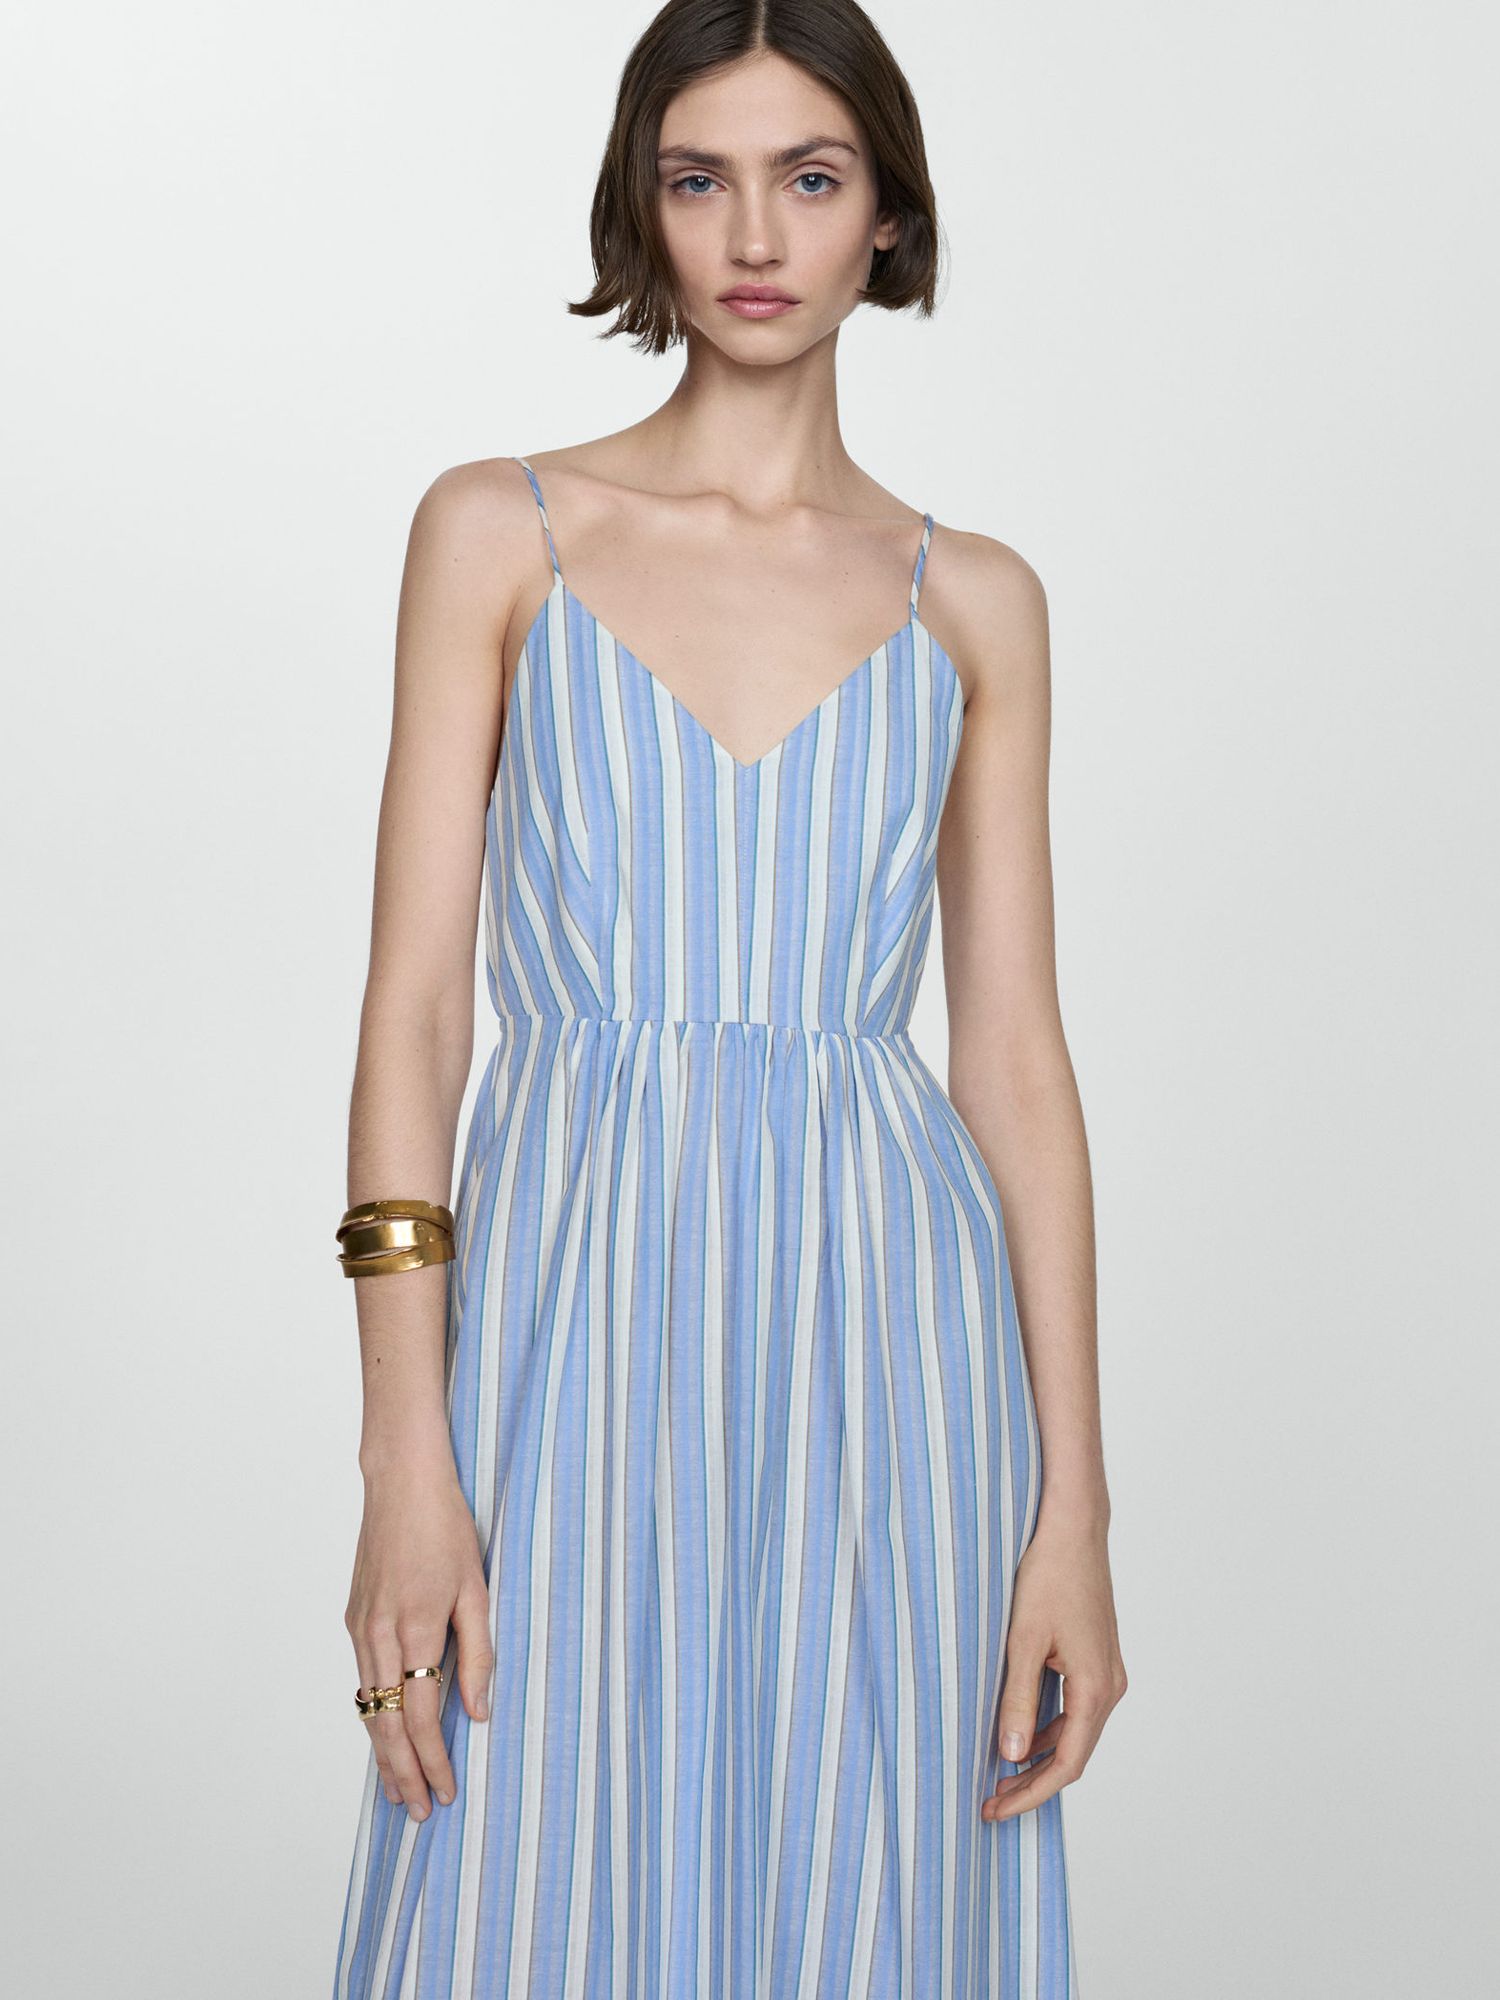 Mango Cristi Cut-Out Striped Maxi Dress, Pastel Blue, 10